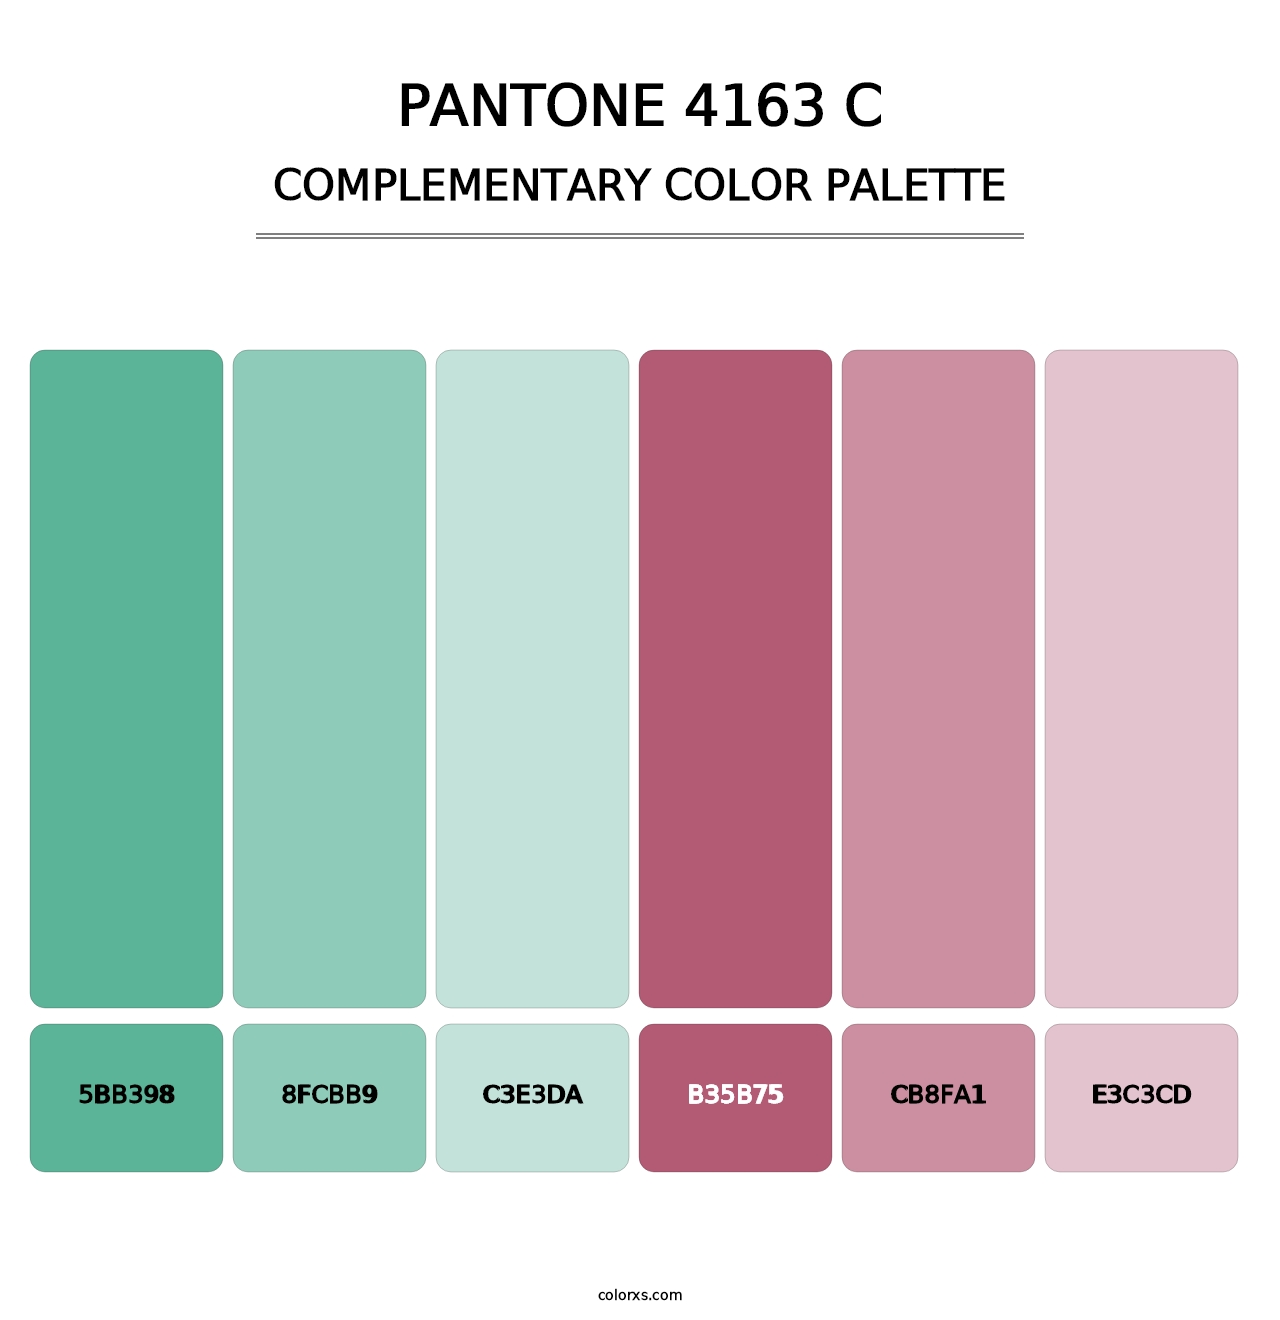 PANTONE 4163 C - Complementary Color Palette